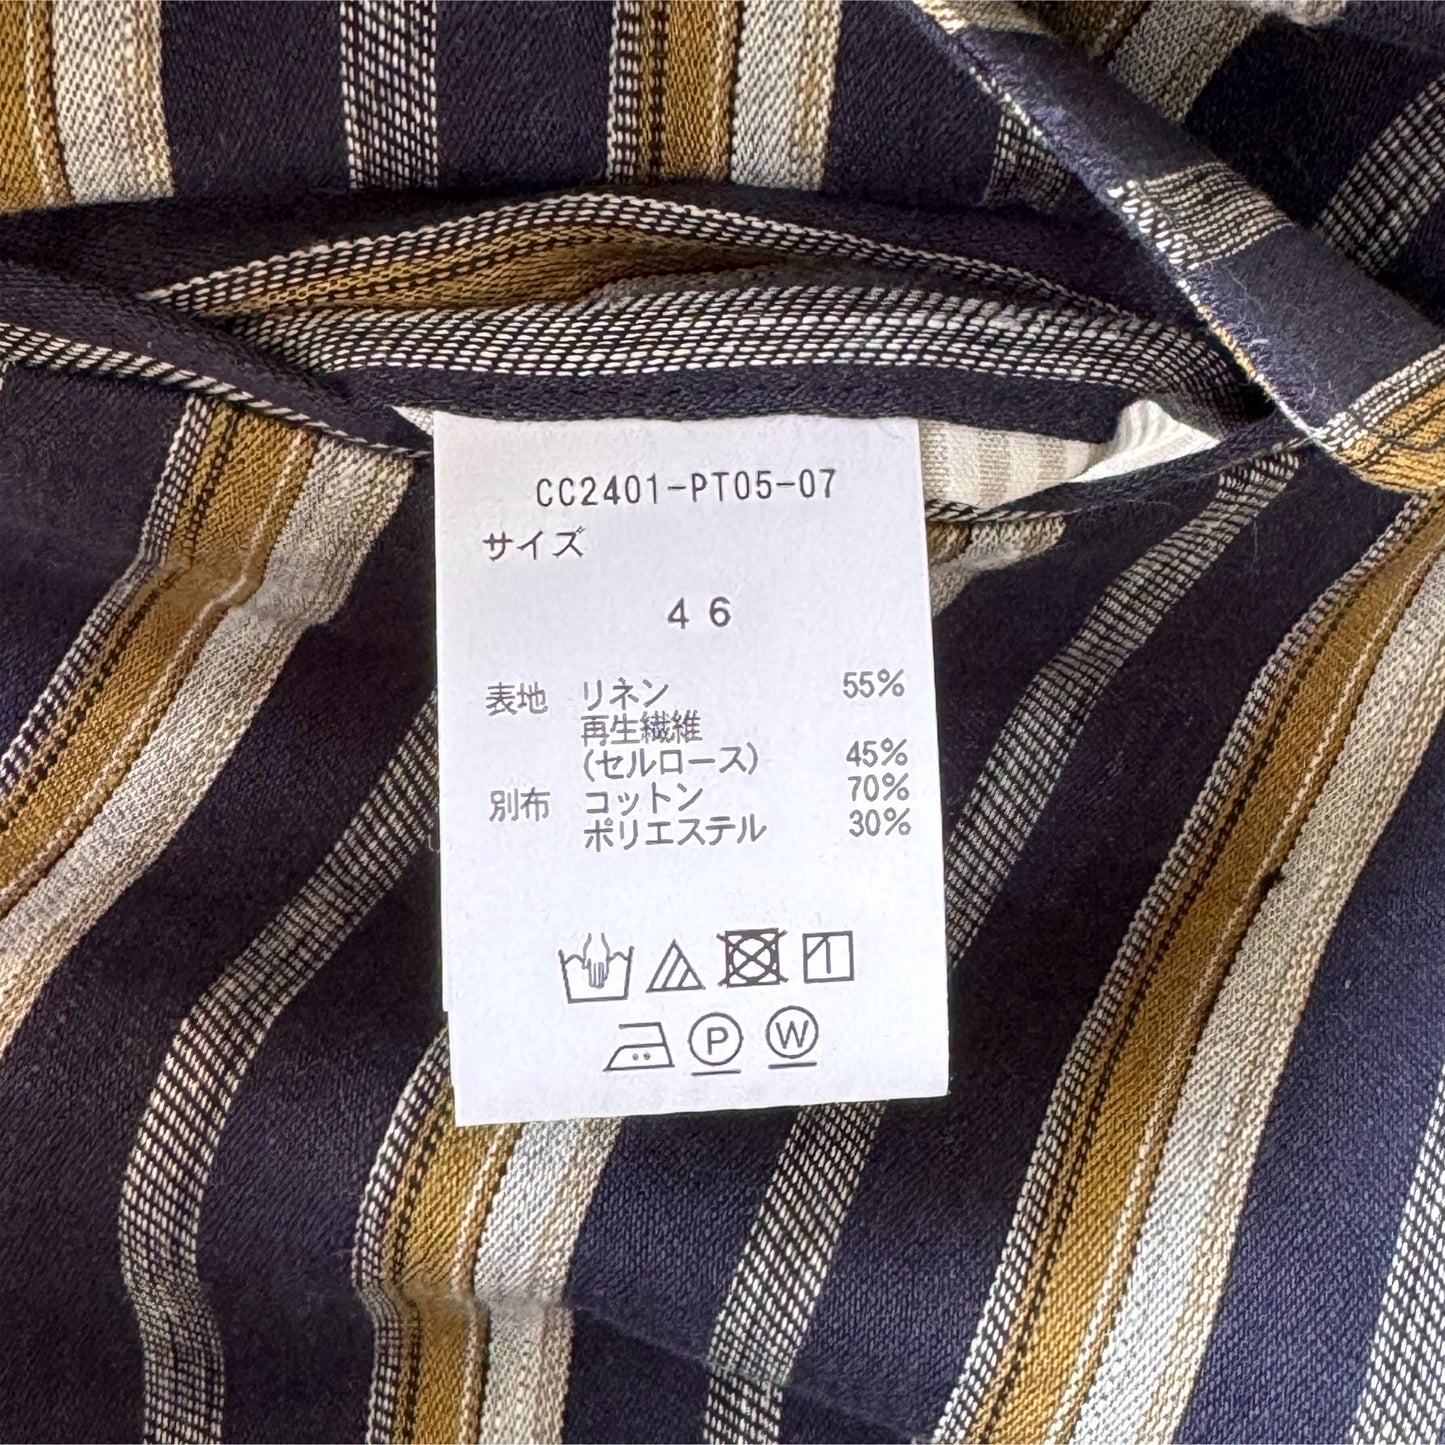 COLONY CLOTHING x Tatsuya Nakamura 10th Anniversary / マルチストライプ プリーツショーツ / CC2401-PT05-06